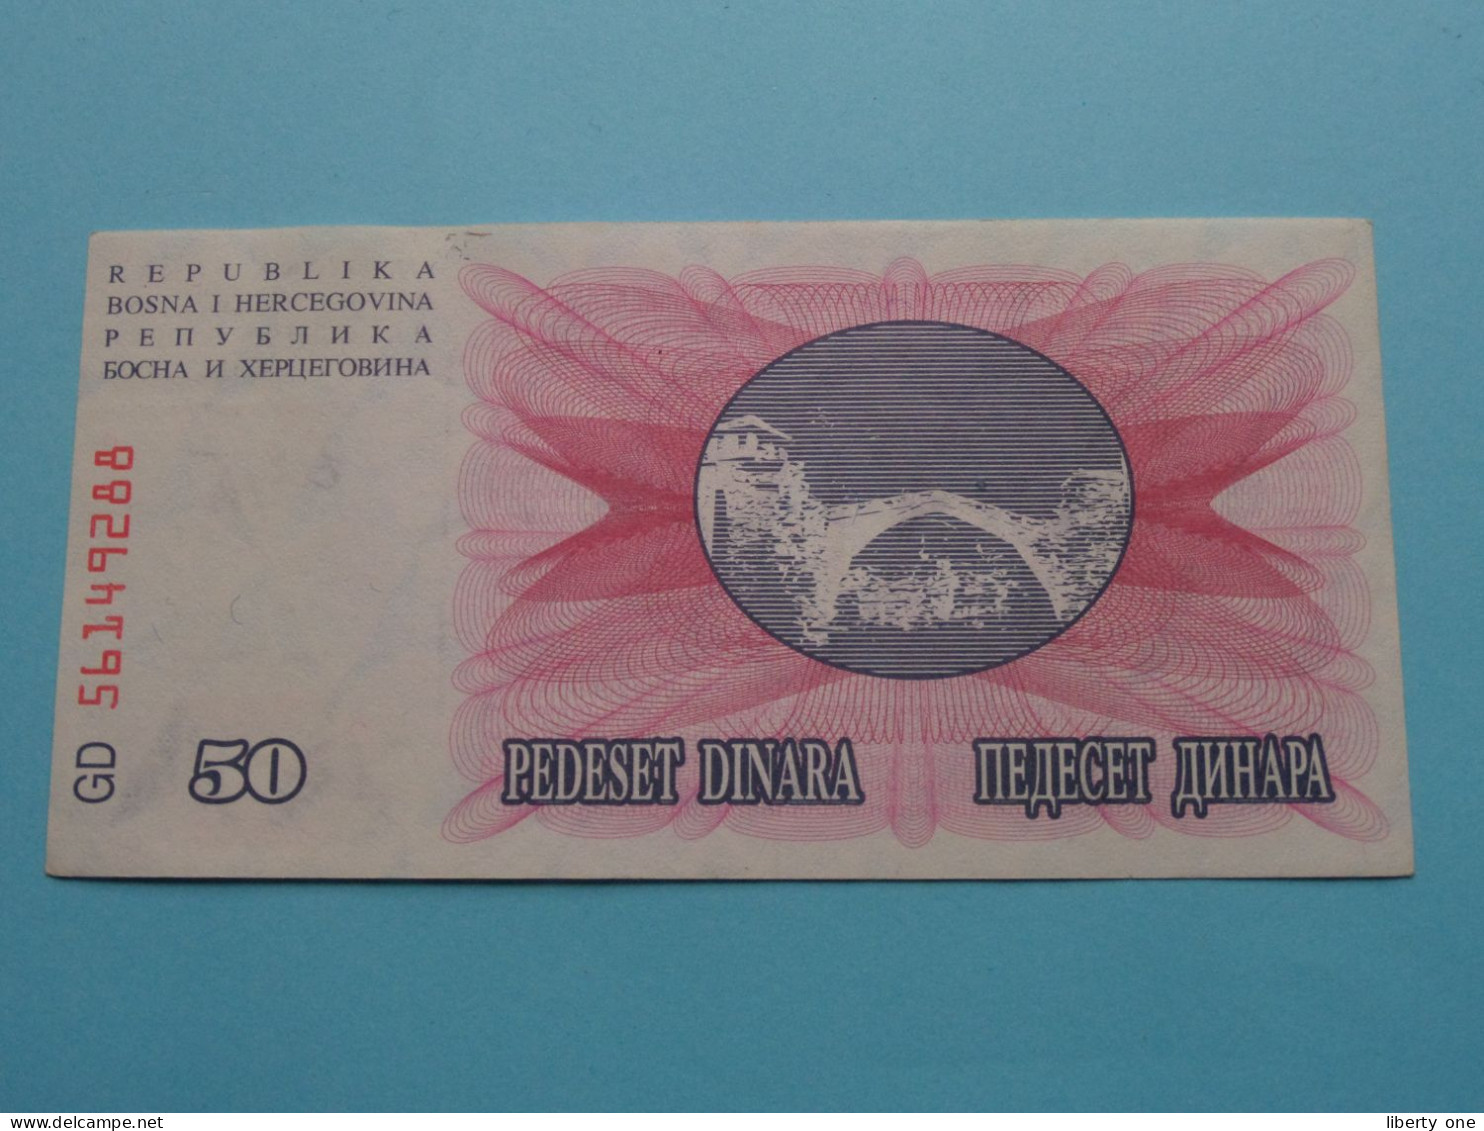 50 Pedeset Dinara ( GD 56149288 ) Bosne I Hercegovine - 1992 ( Voir / See > Scans ) UNC ! - Bosnien-Herzegowina